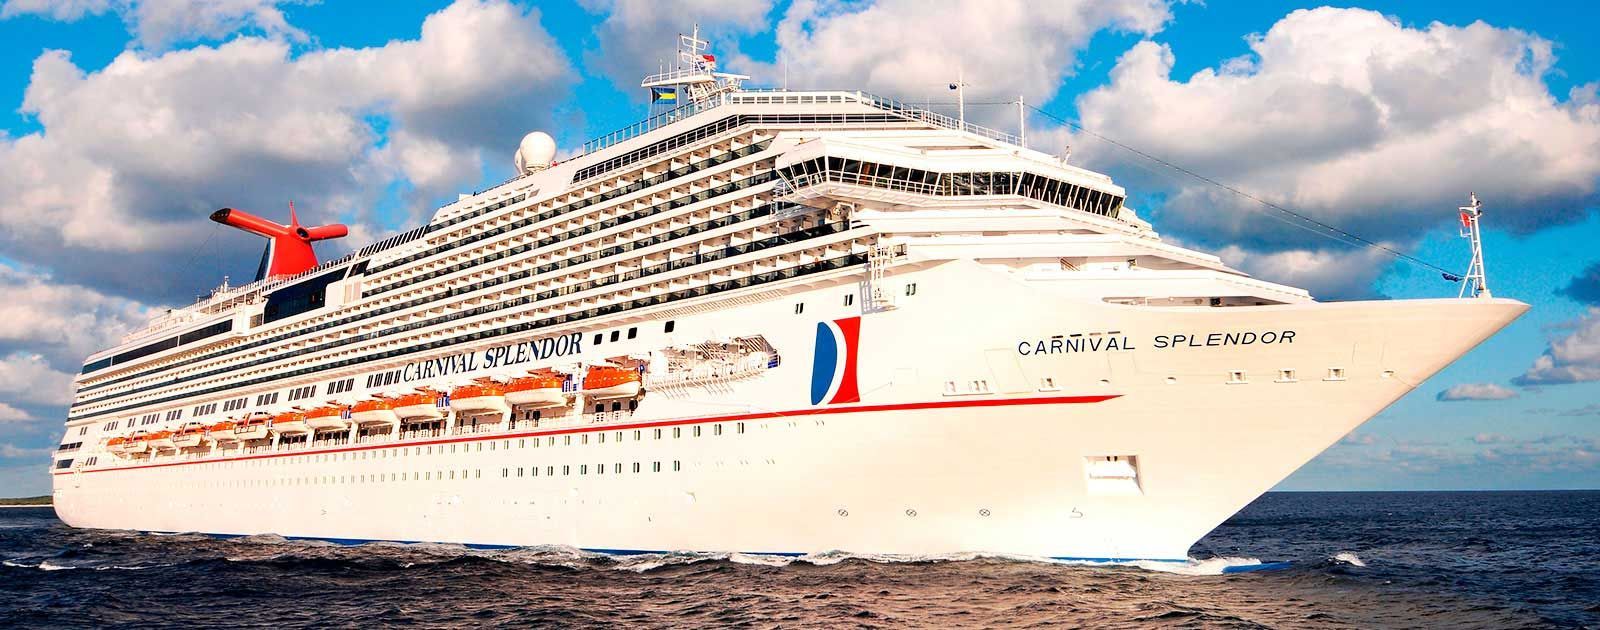 El mega crucero Carnival Splendor arribará a Cabo San Lucas